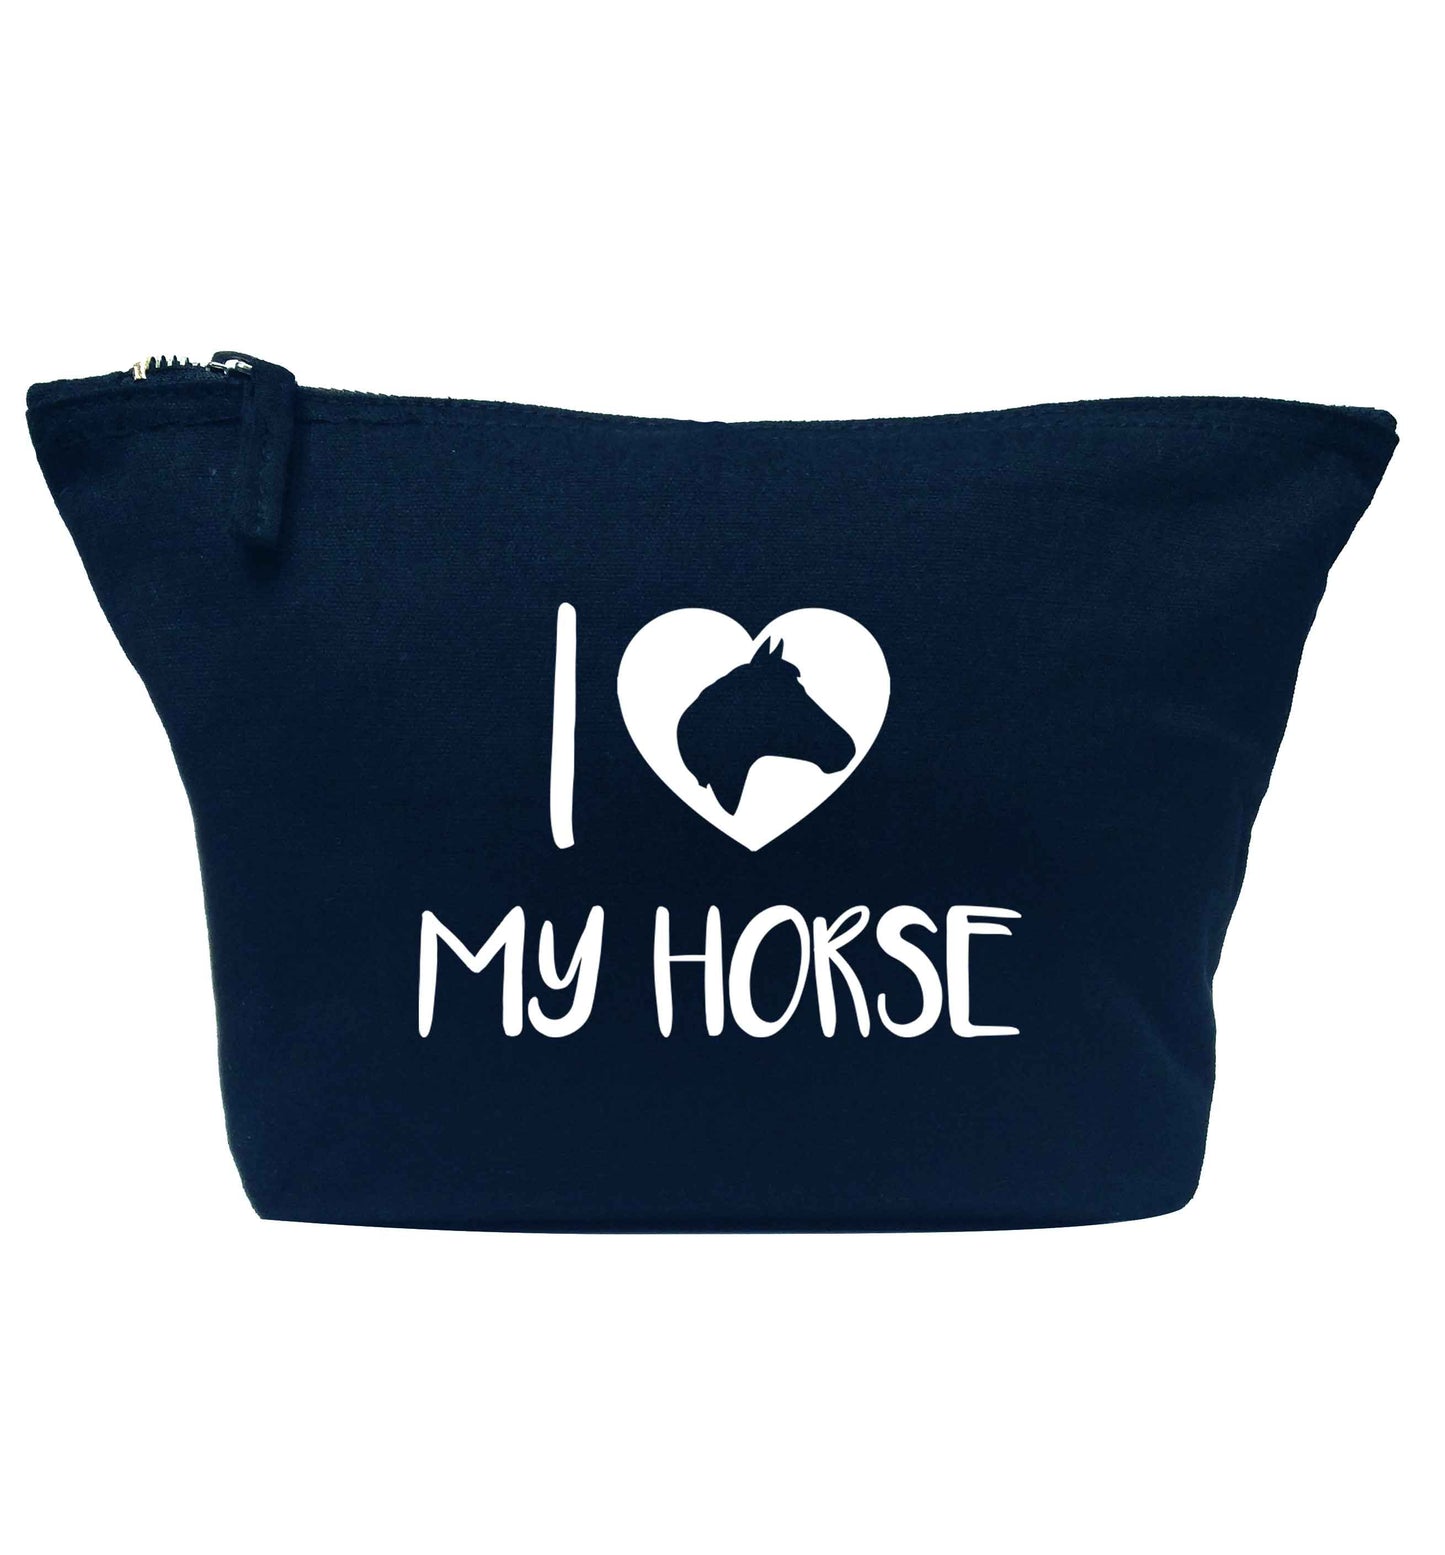 I love my horse navy makeup bag